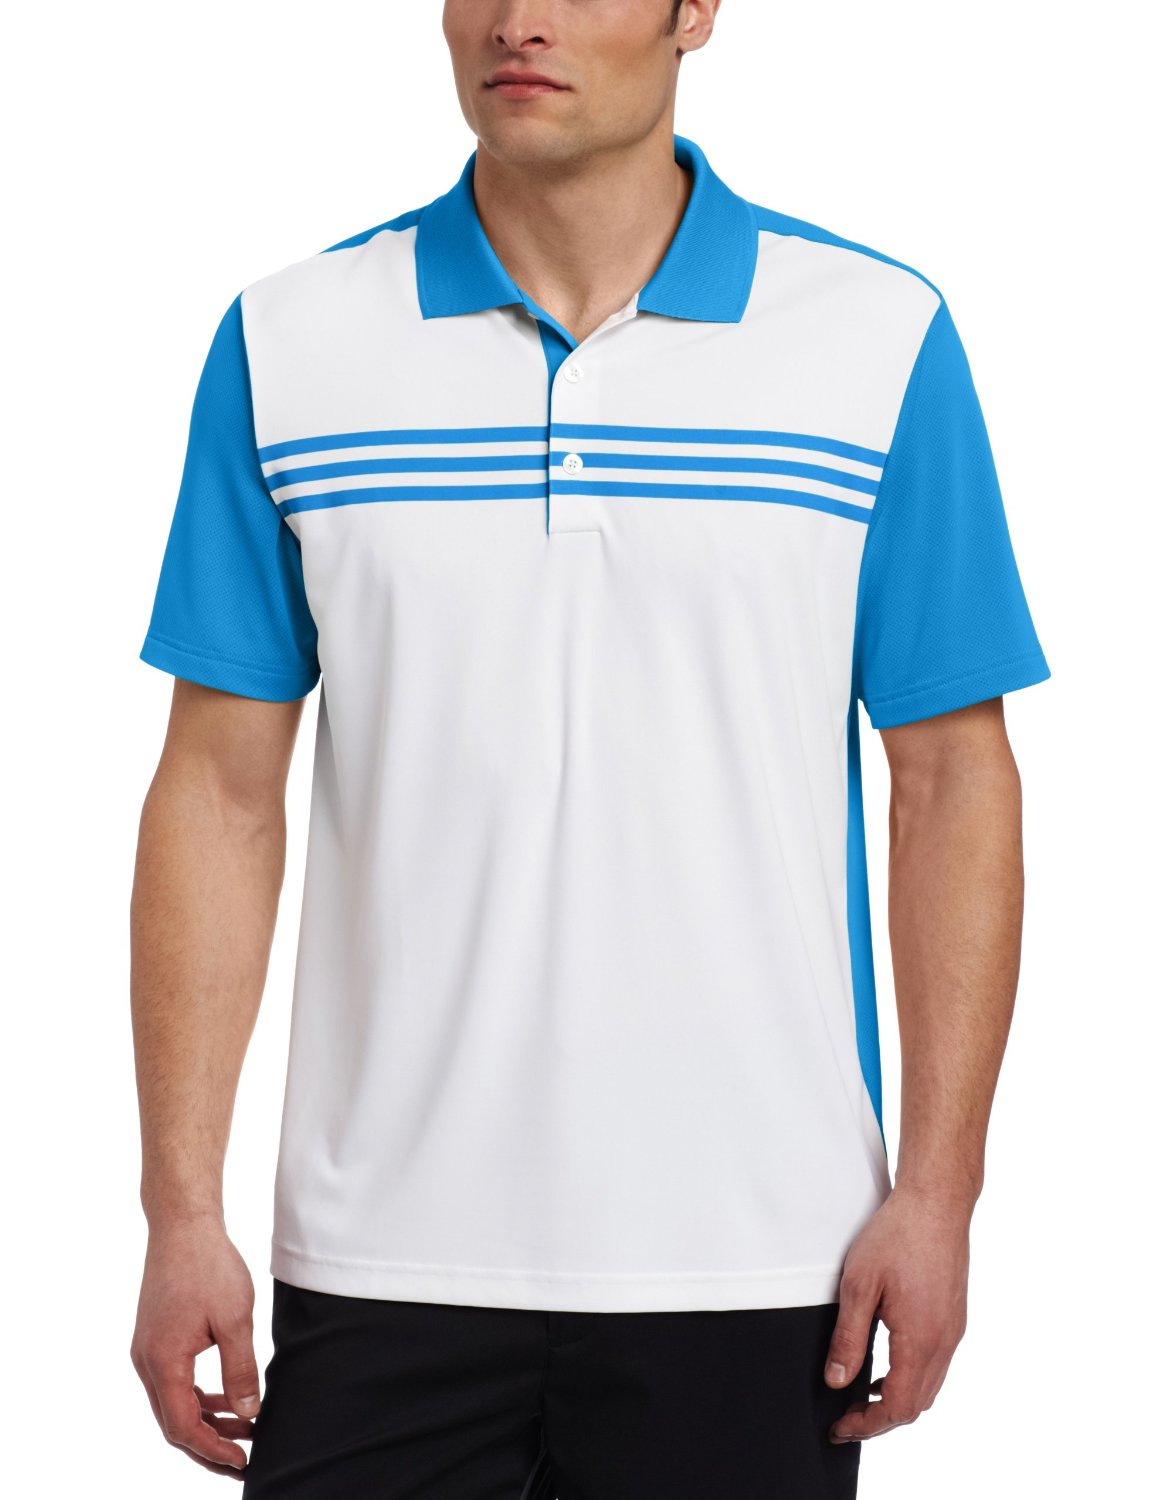 Adidas Mens Climacool 3 Stripes Color Block Golf Polo Shirts